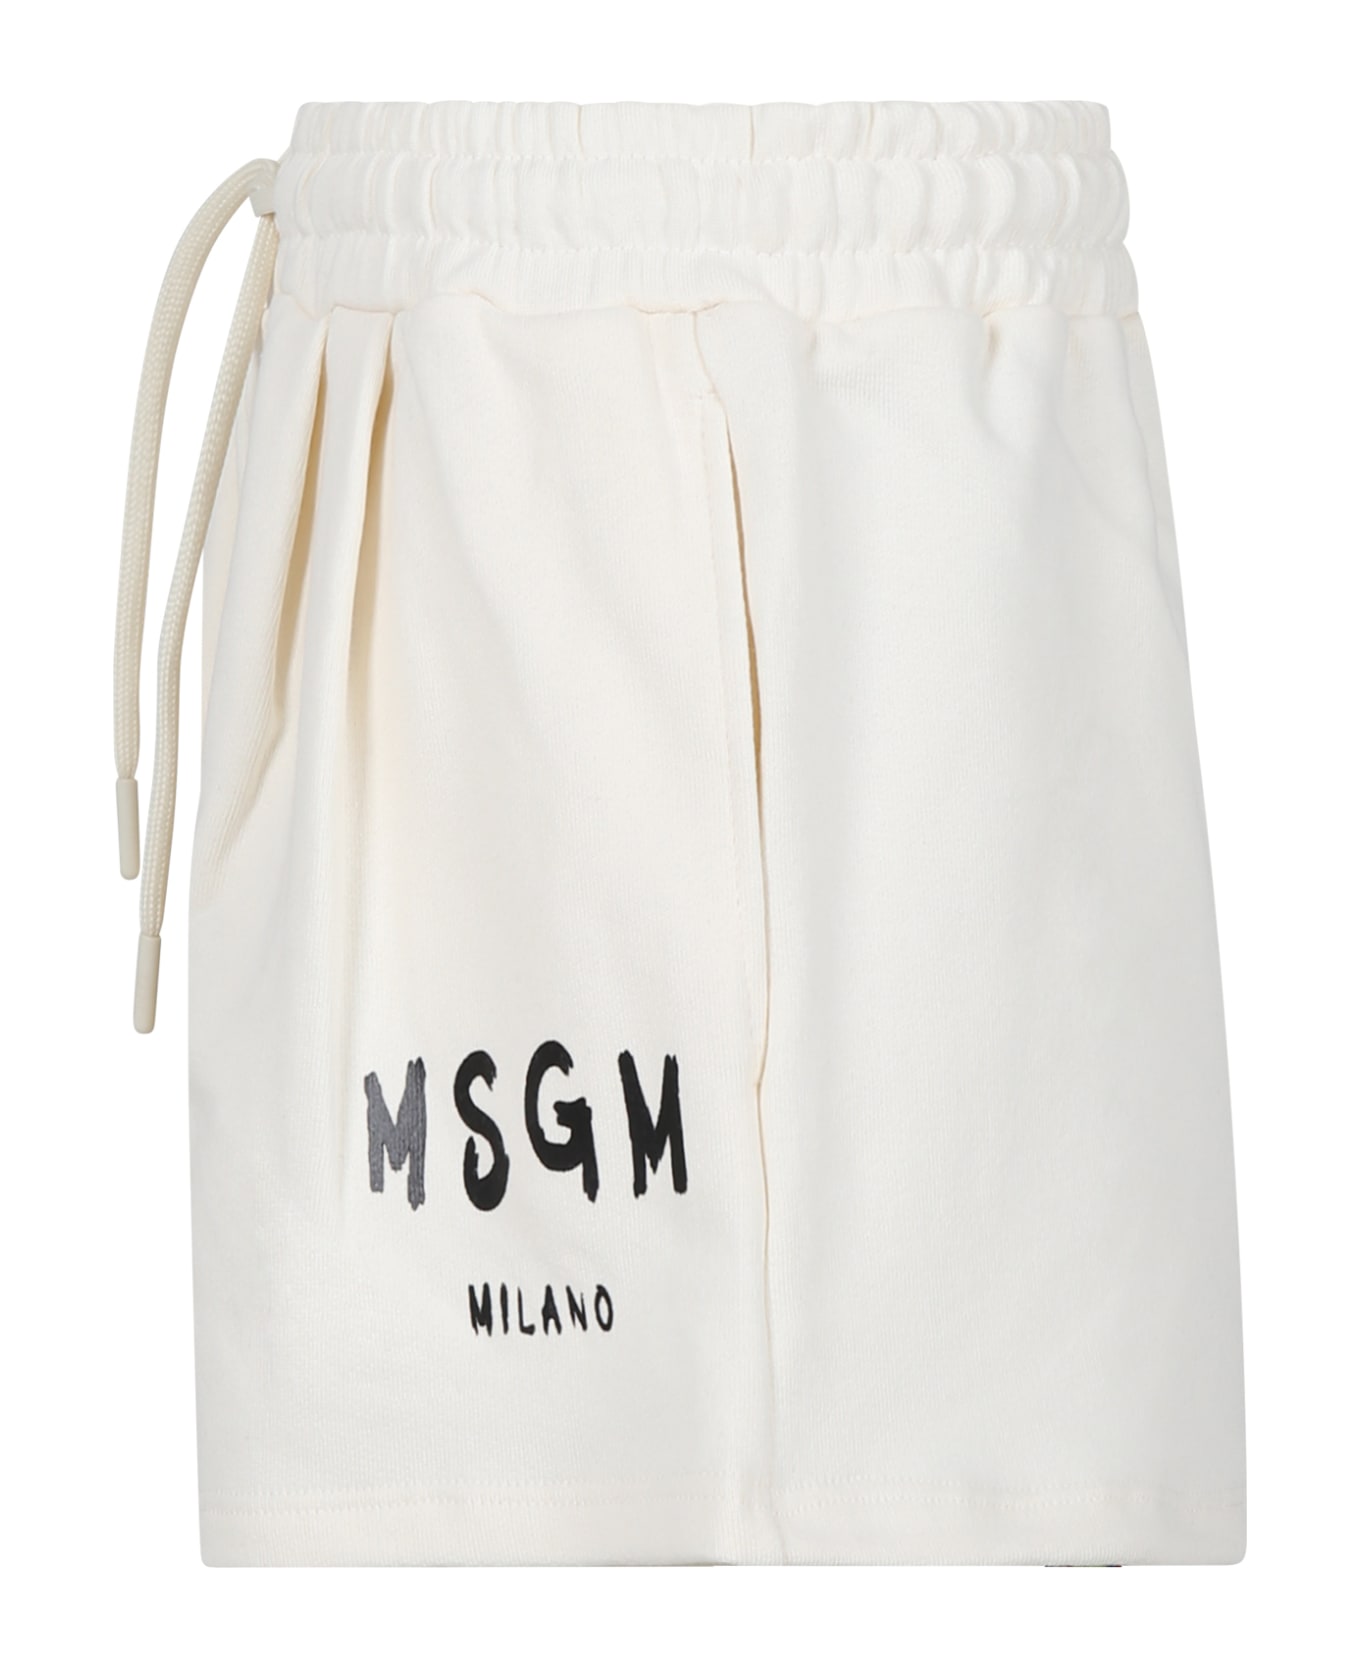 MSGM Ivory Shorts For Girl With Logo - Ivory